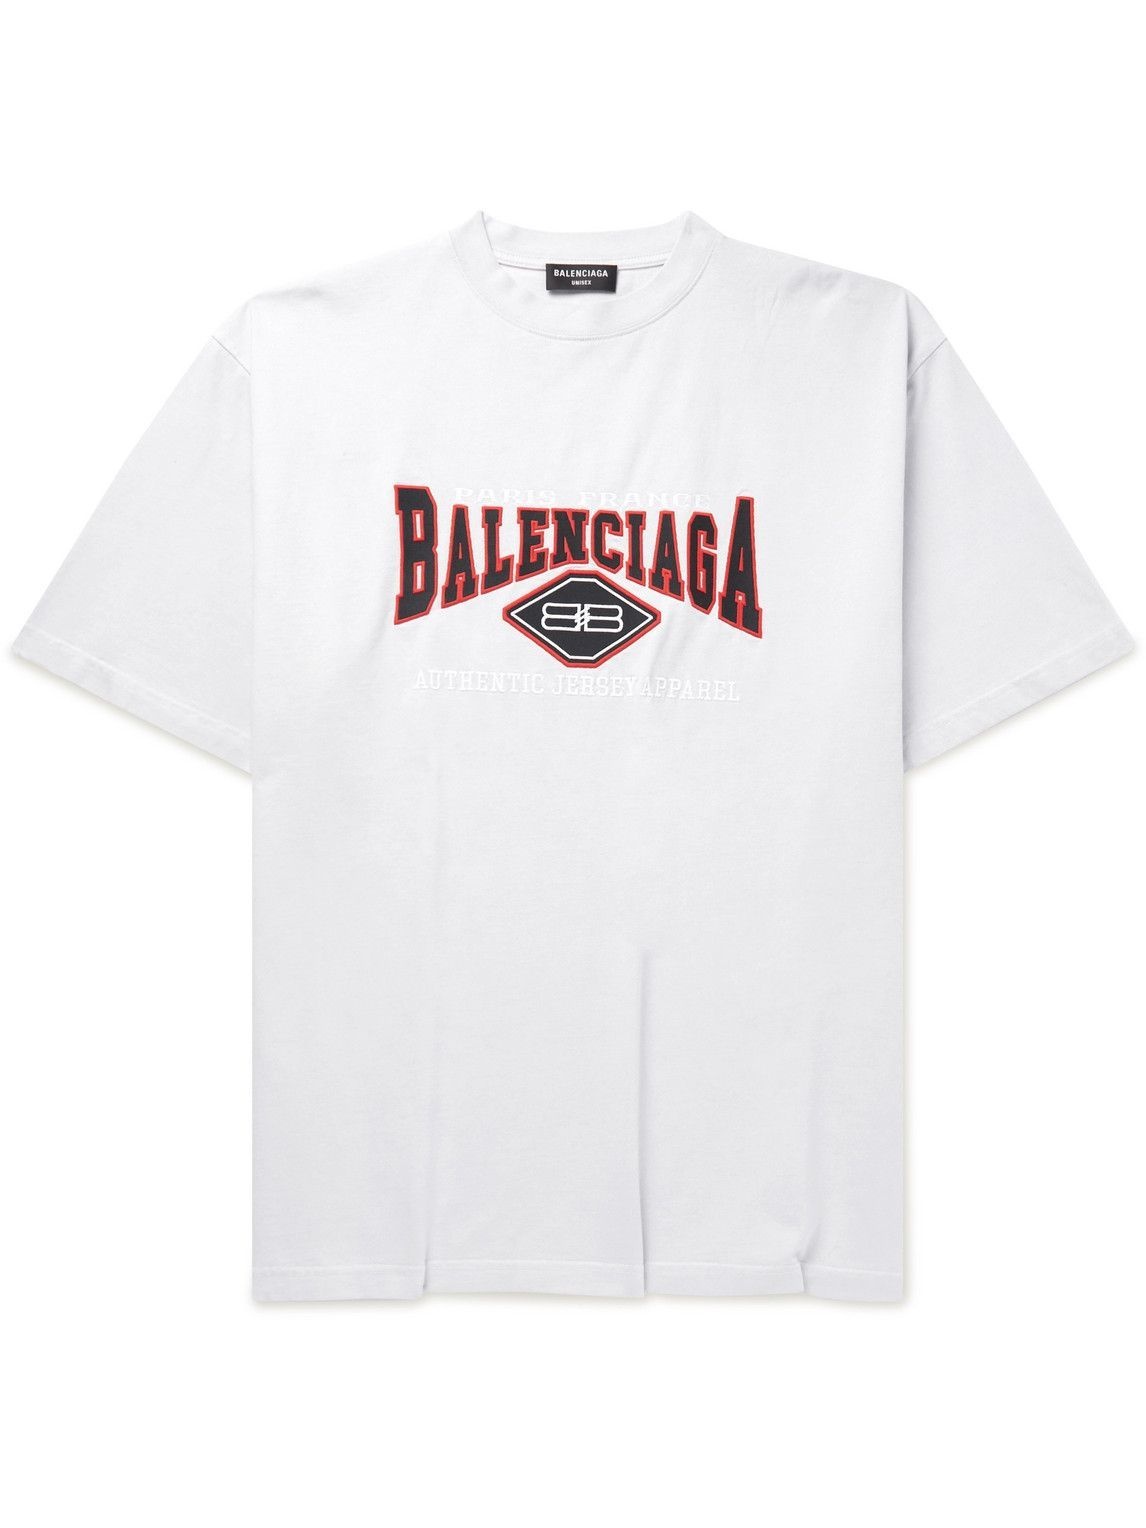 BALENCIAGA Embroidered cotton-jersey T-shirt  Balenciaga t shirt, Shirts, Balenciaga  clothes